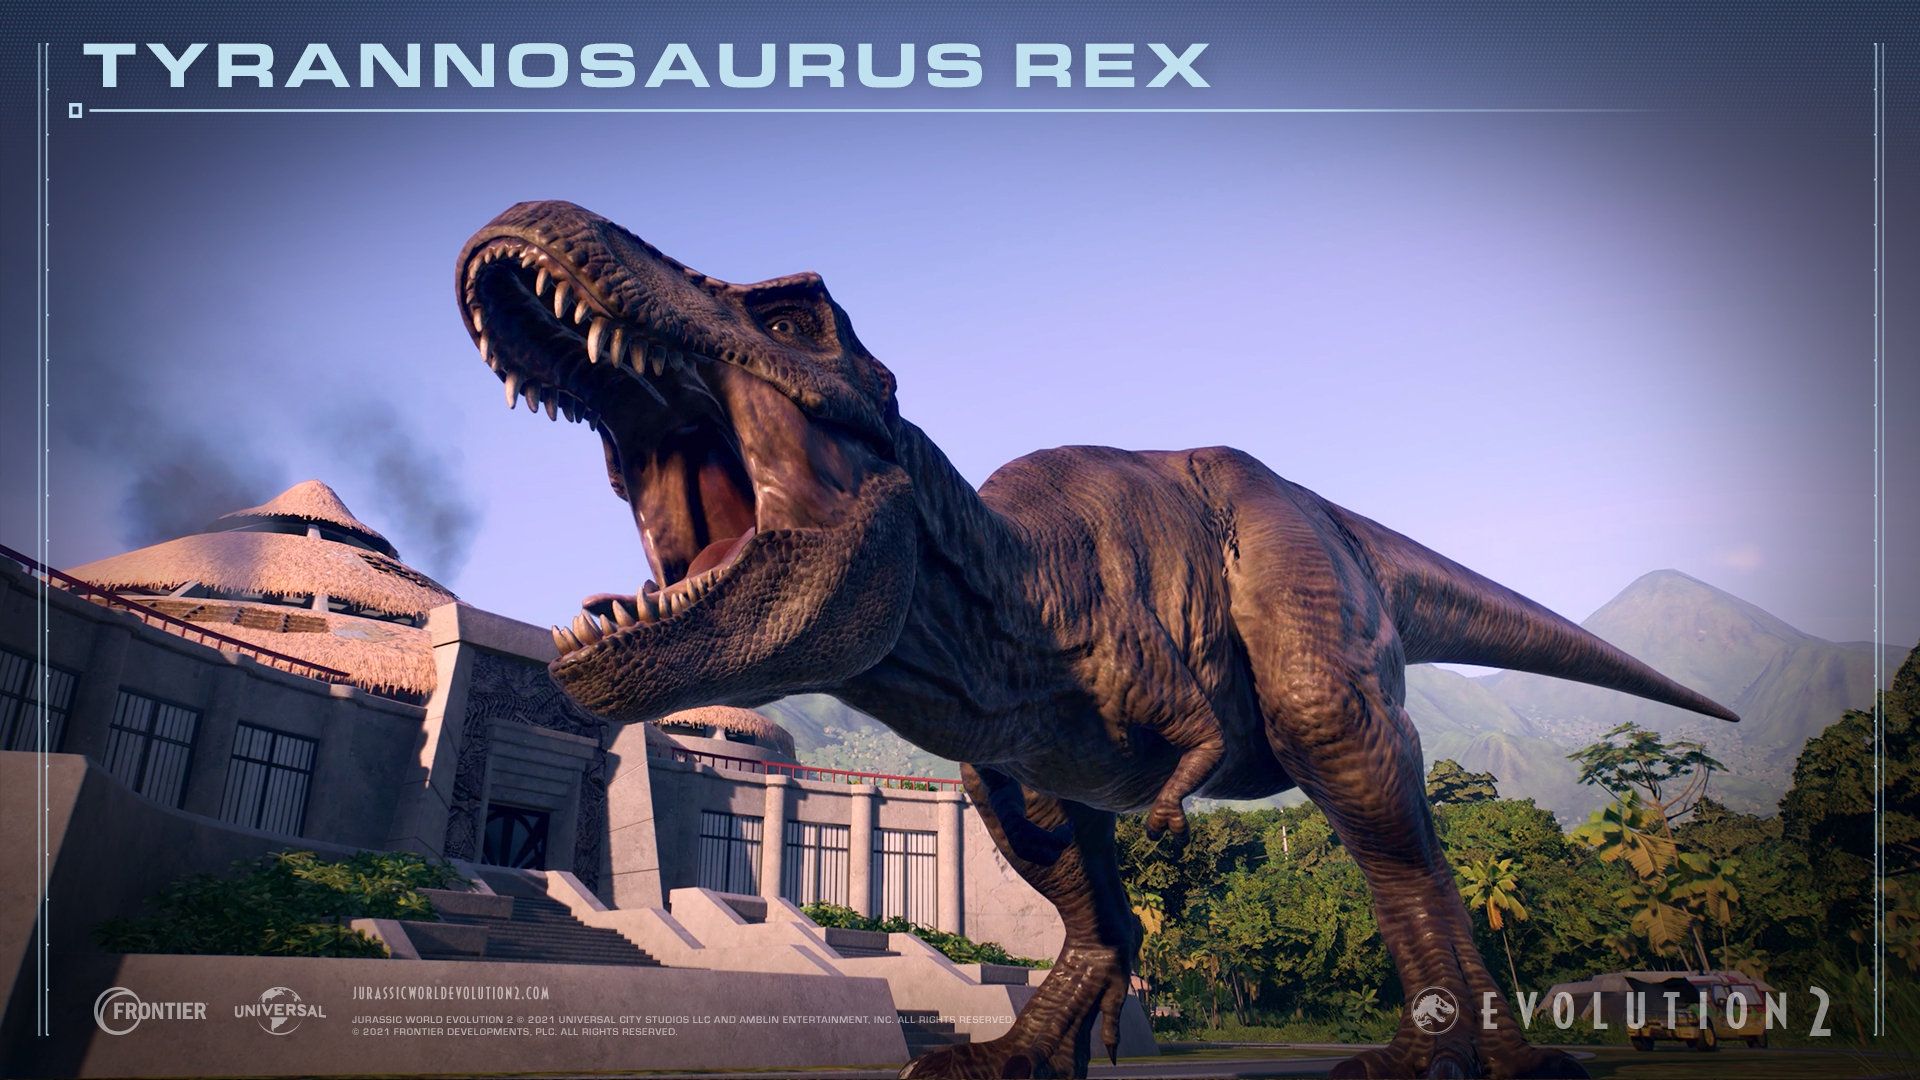 How to unlock the Tyrannosaurus in Jurassic World Evolution 2